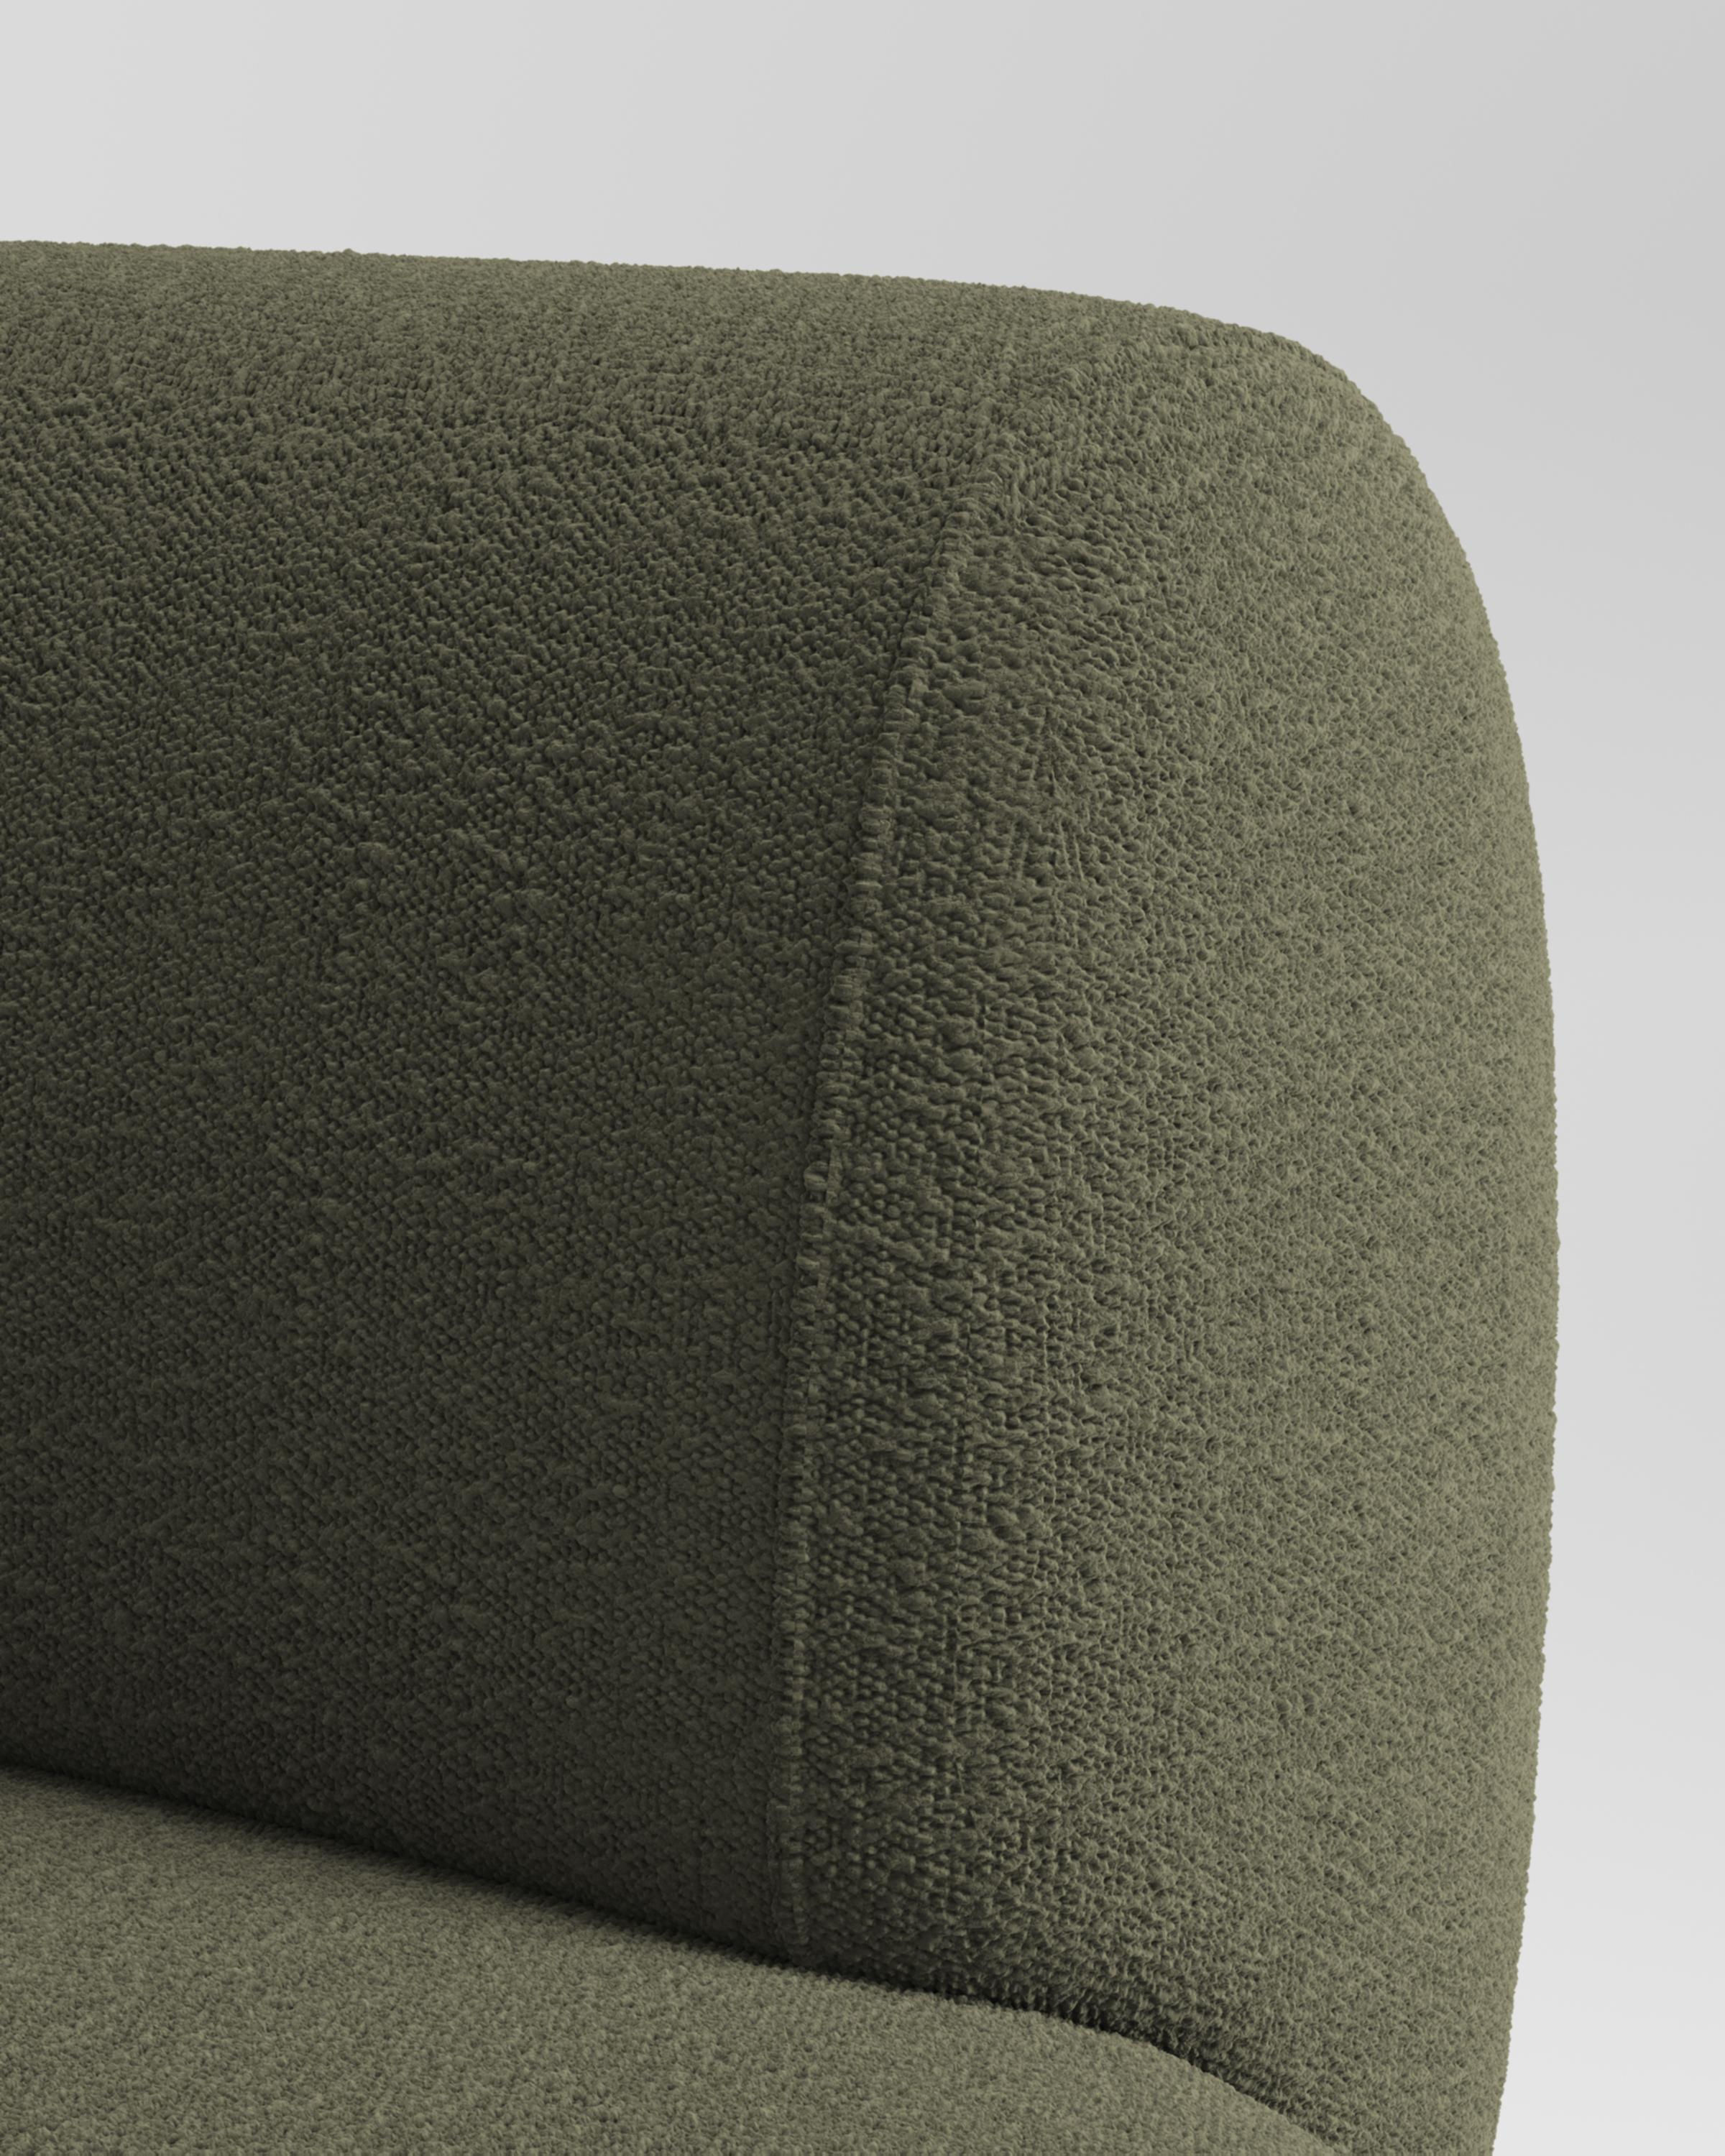 Portuguese Collector Hug Sofa Designed by Ferrianisbolgi Fabric Bouclé Olive For Sale